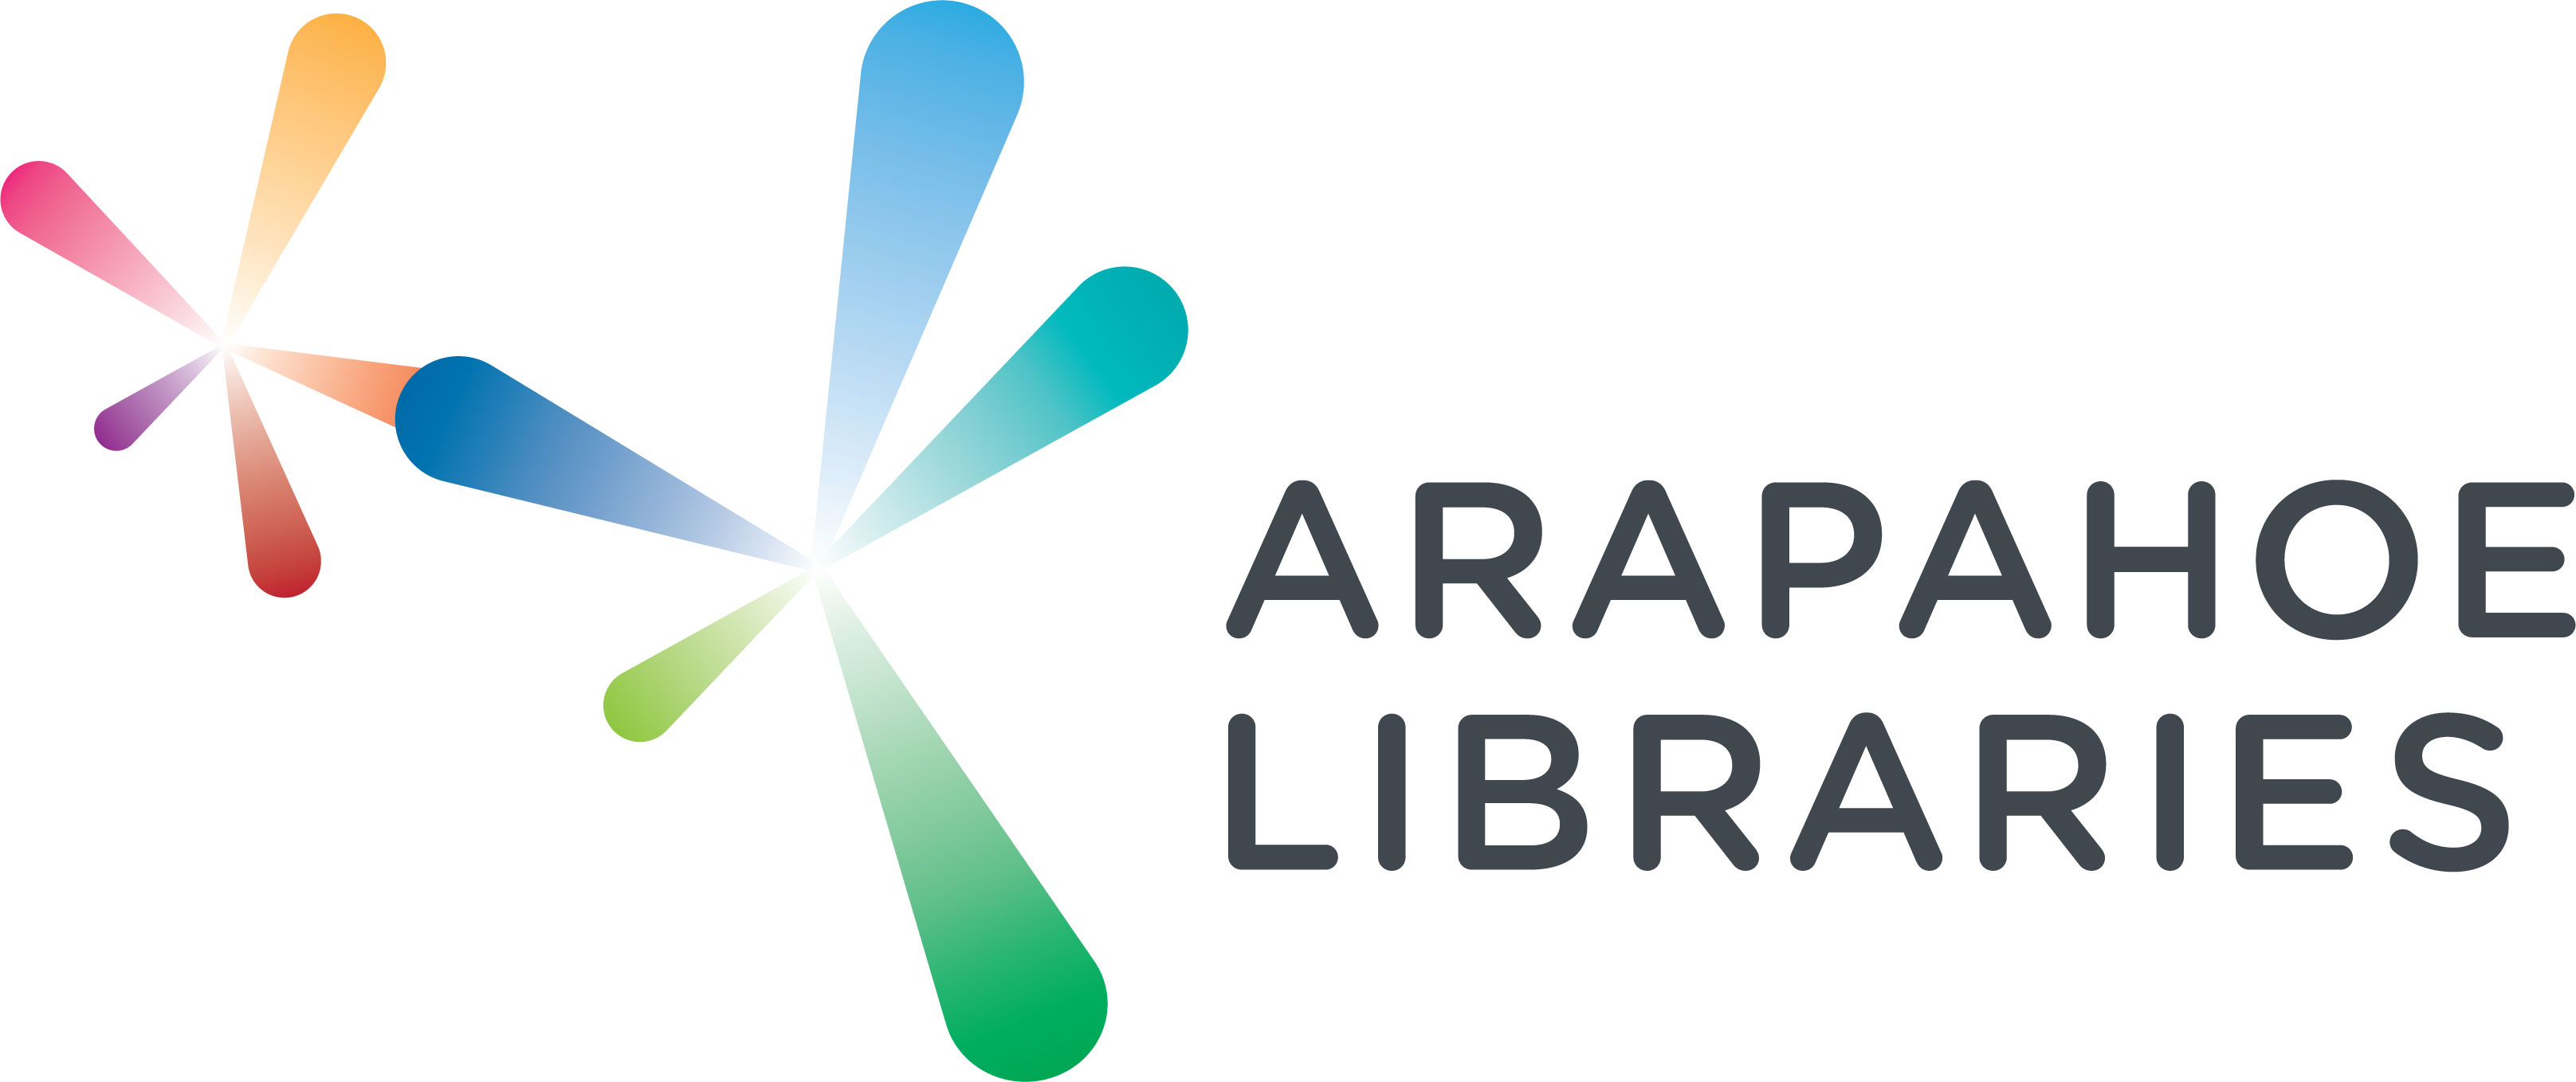 Arapahoe Libraries logo image